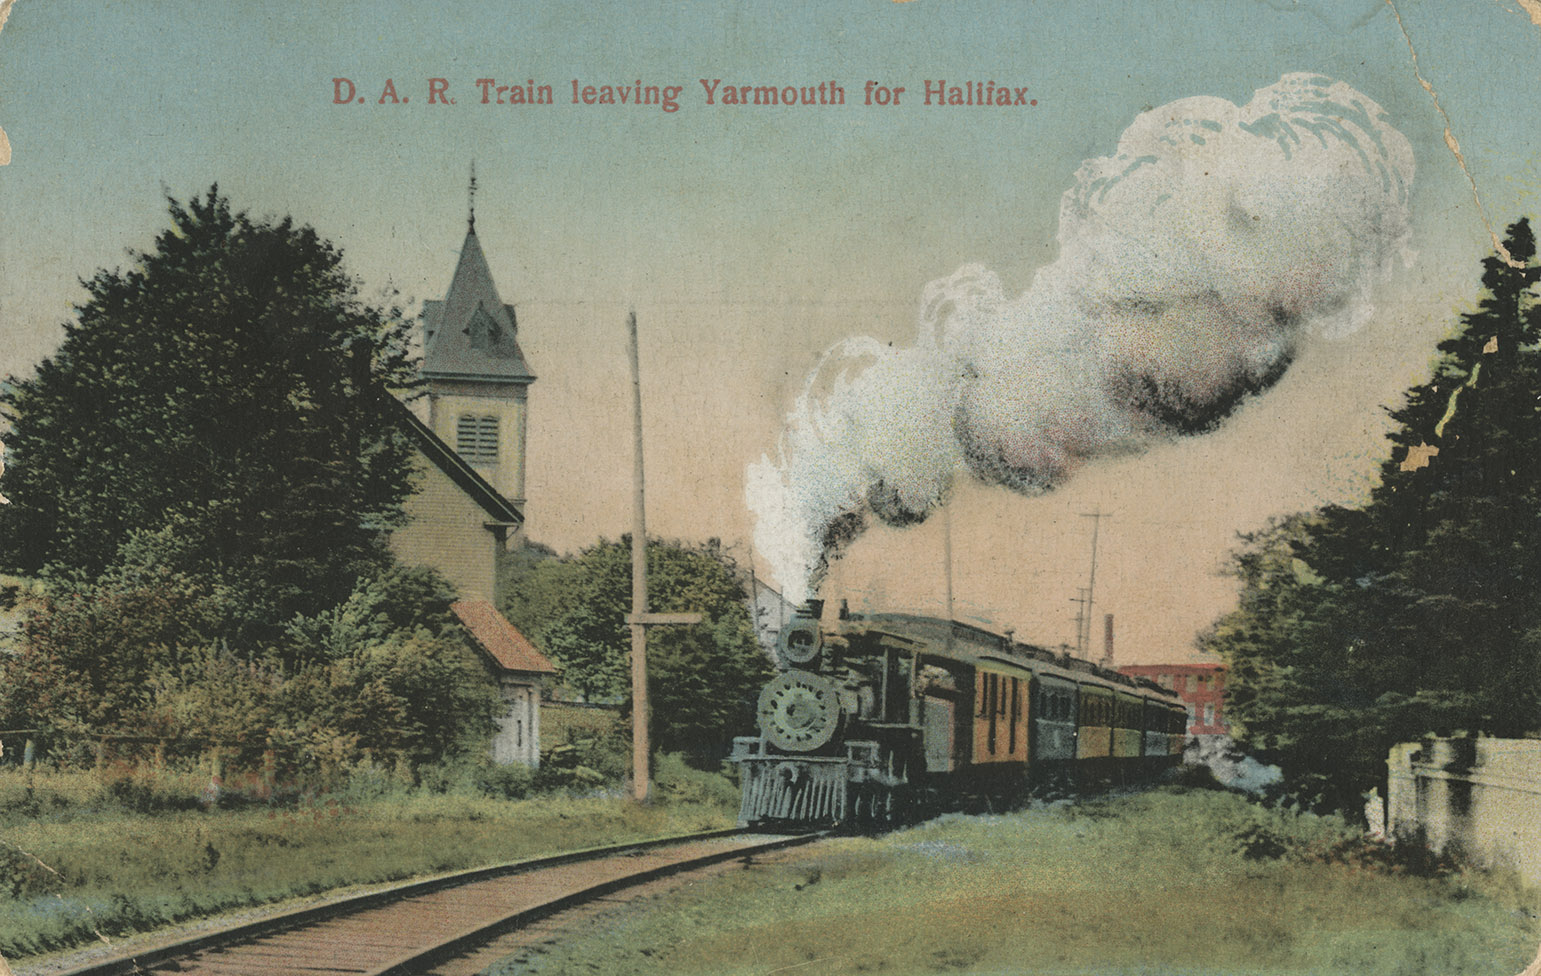 communityalbums - Dominion Atlantic Railway (D.A.R.)